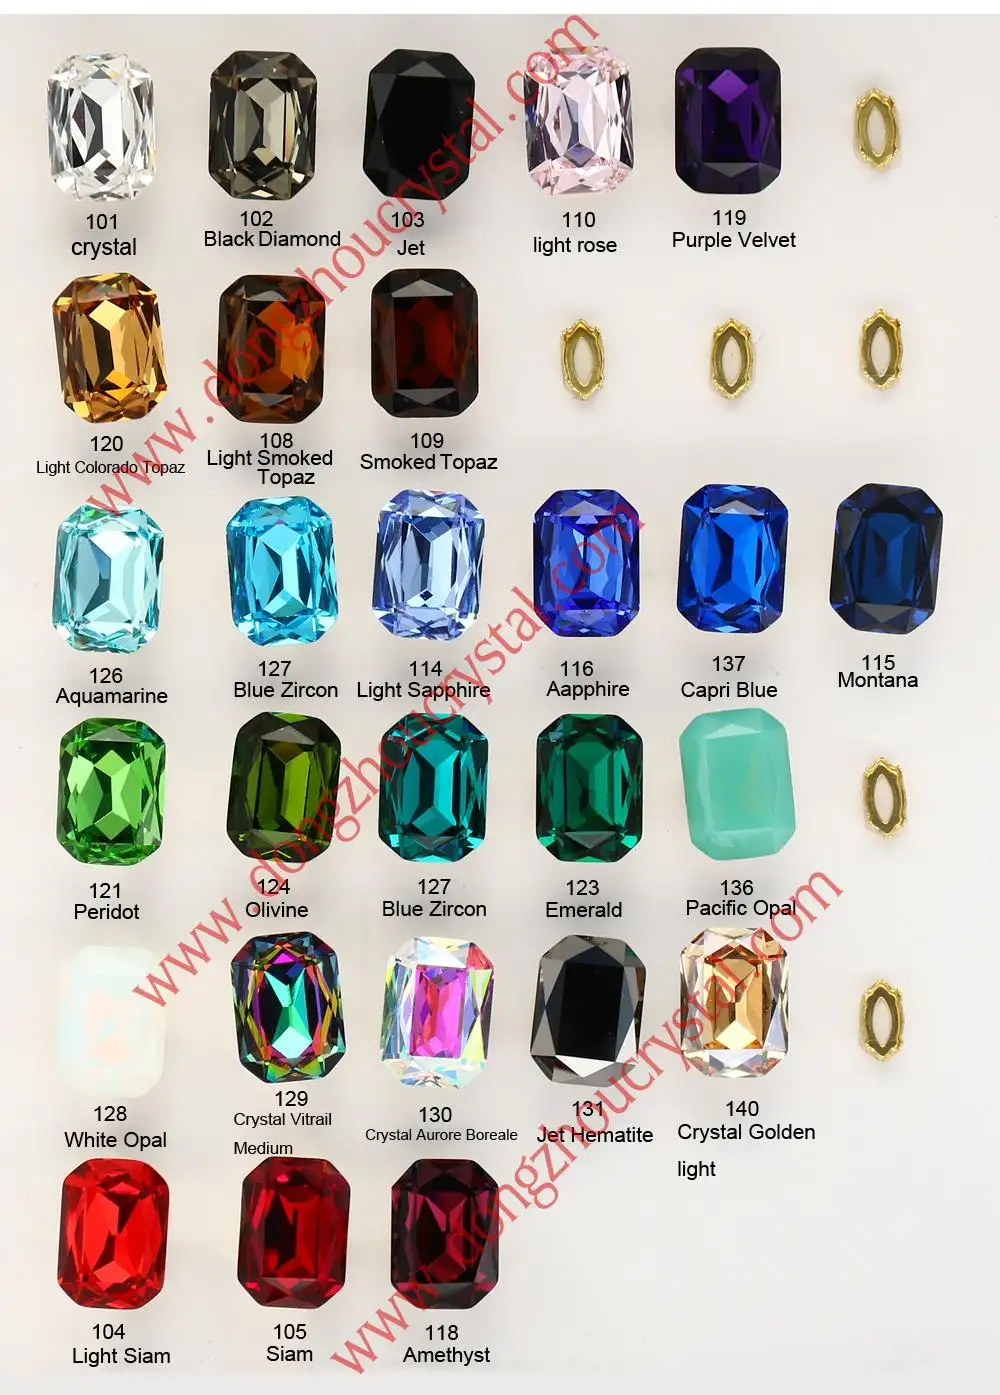 Strass com garra cristal octógono k9 pedra extravagante contas de cristal soltas para pingente de joias acessórios de vestuário diy